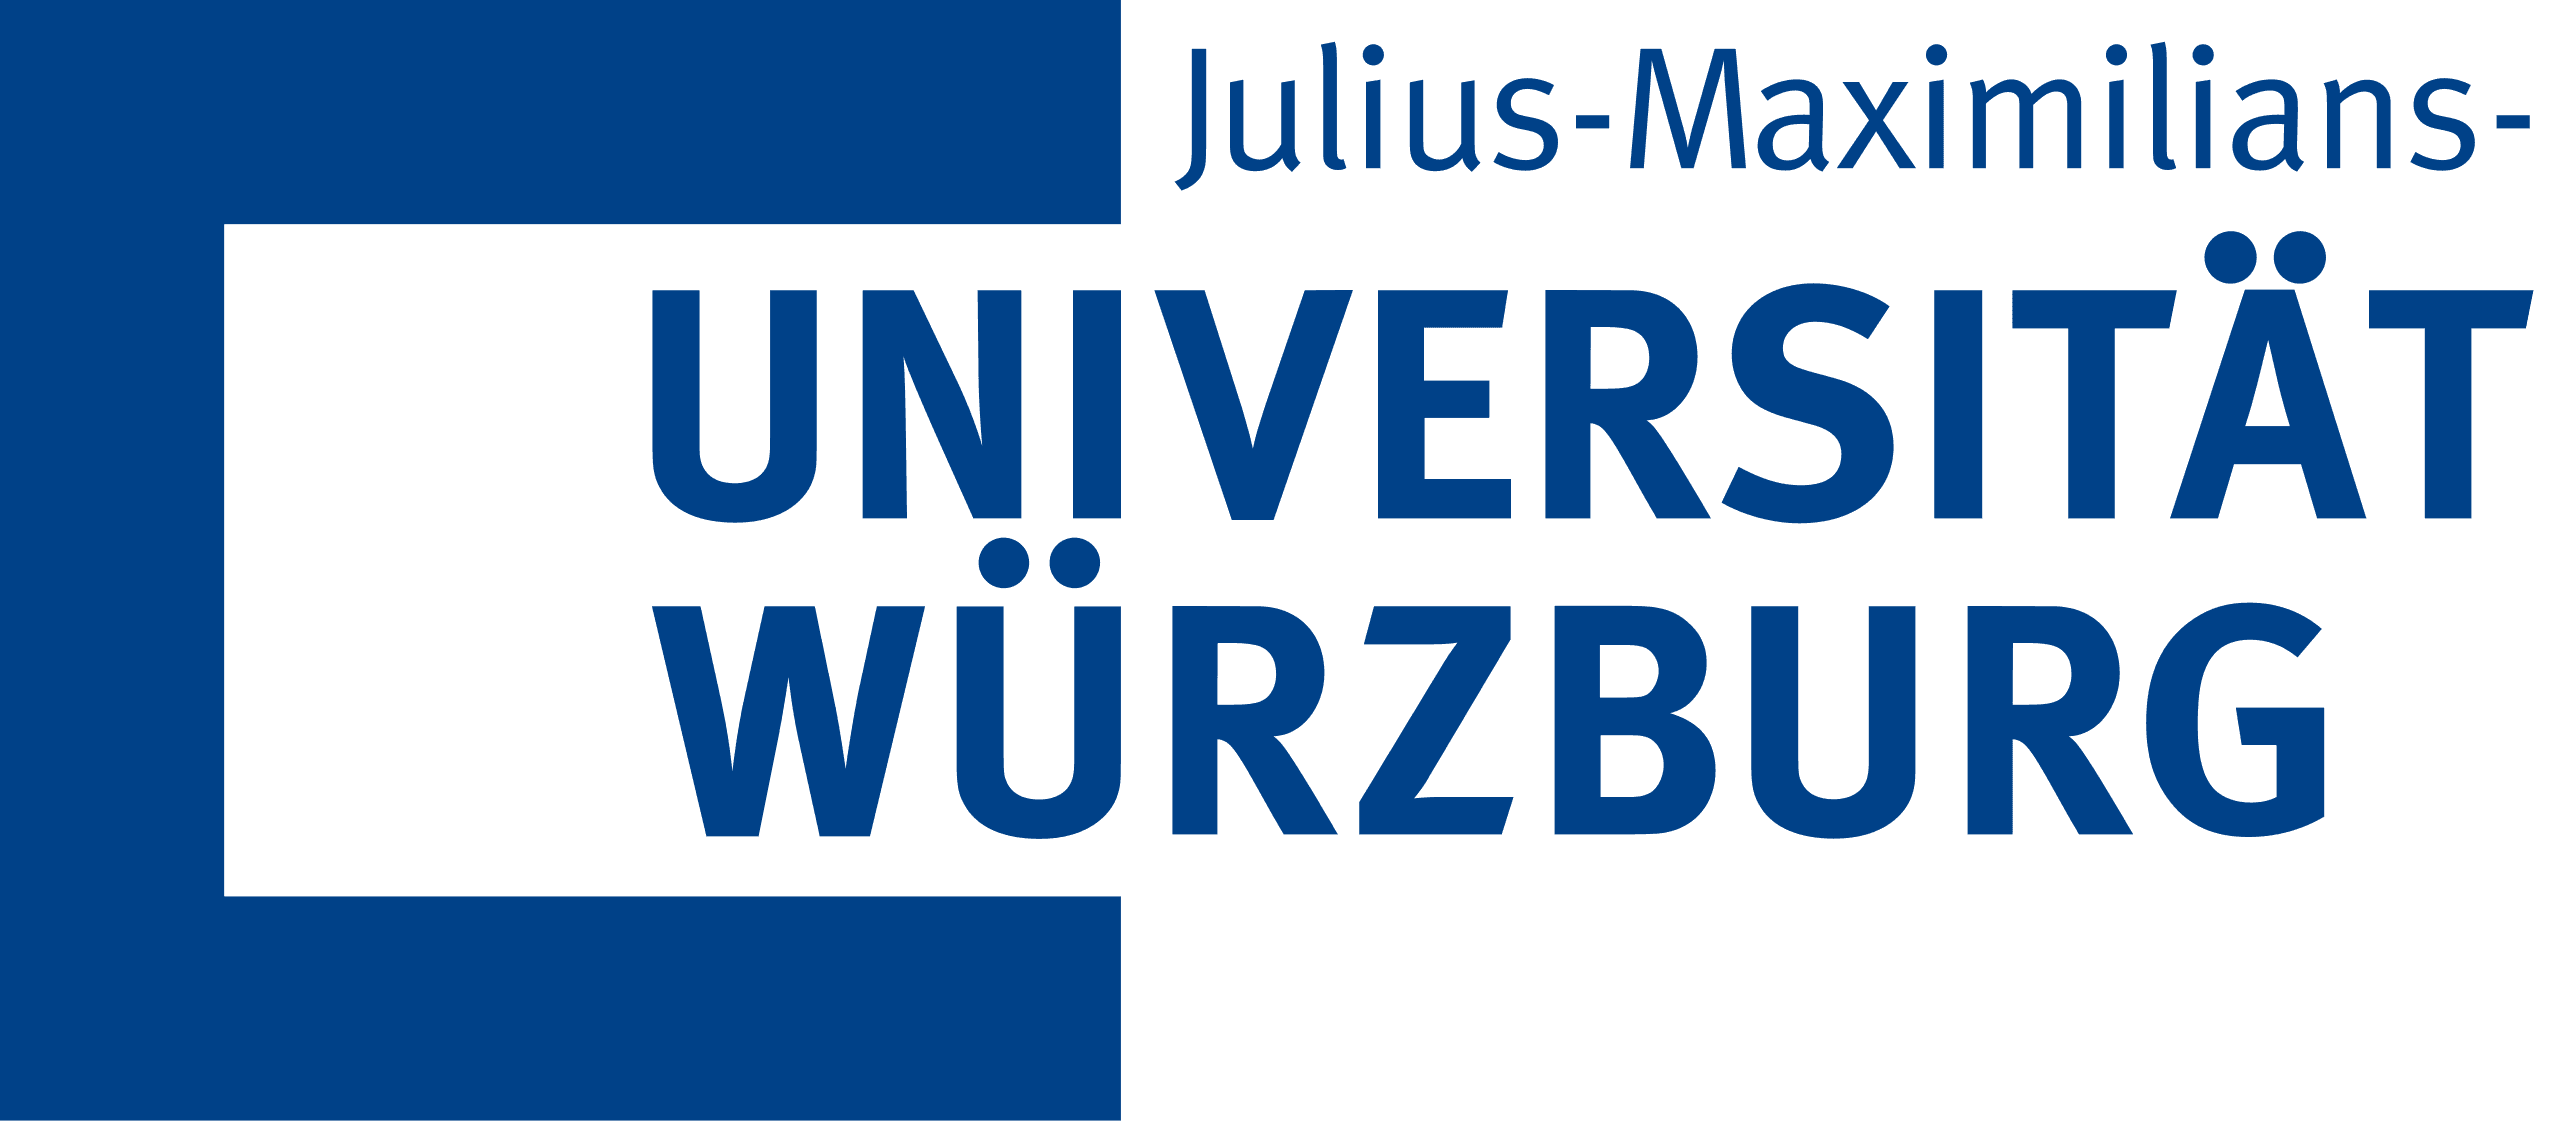 julius-maximilians-universitat-wurzburg-d6696b8b9a-cover-picture